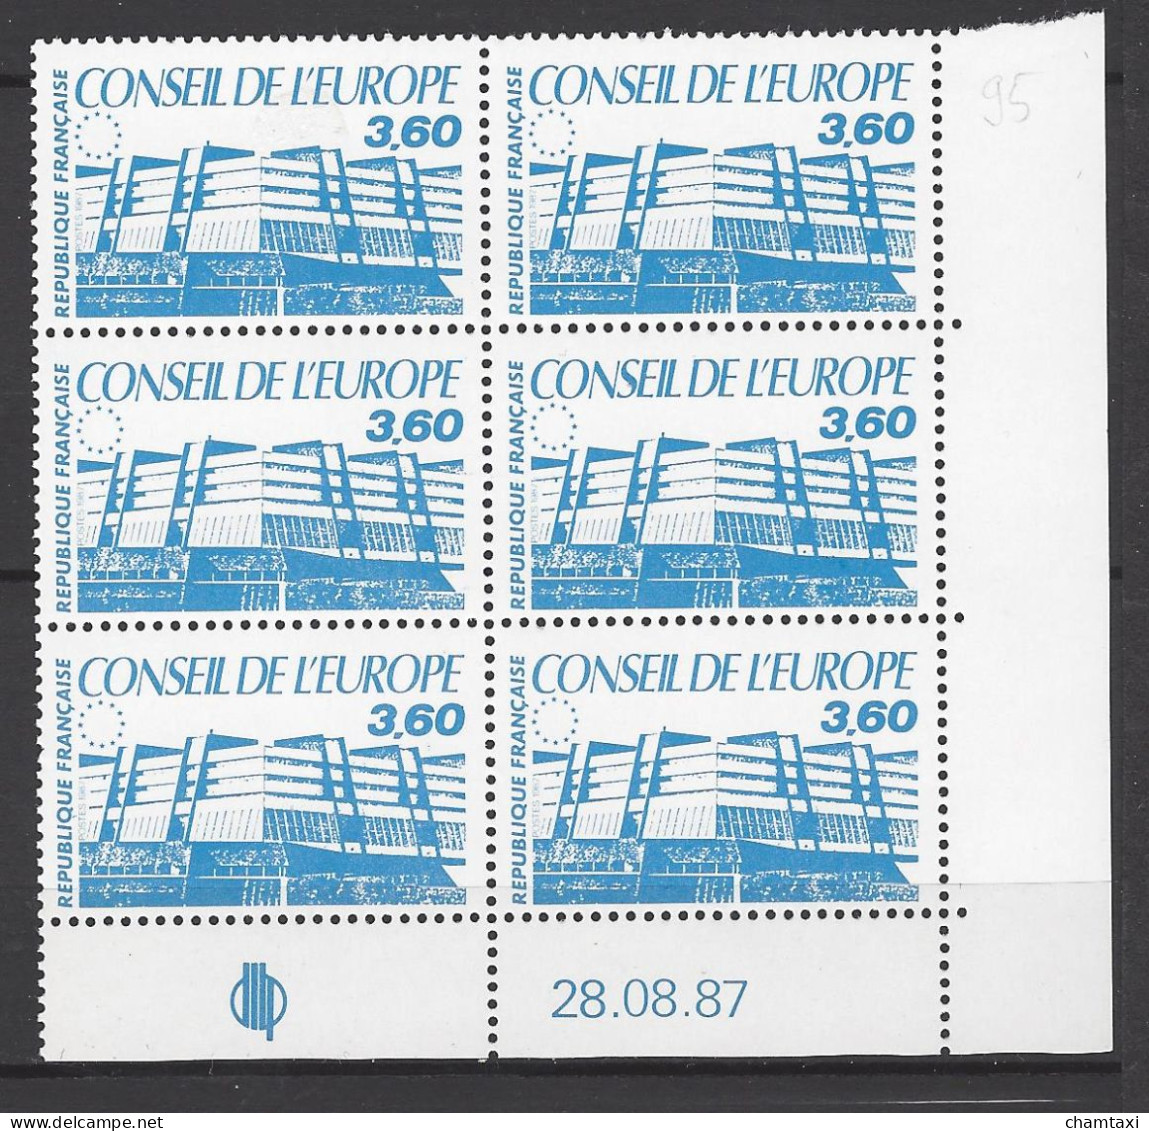 CD 97 FRANCE 1987 TIMBRE SERVICE CONSEIL DE L EUROPE BATIMENT DE STRASBOURG BLOC 6 TIMBRES COIN DATE 97  : 28 / 08 / 87 - Officials